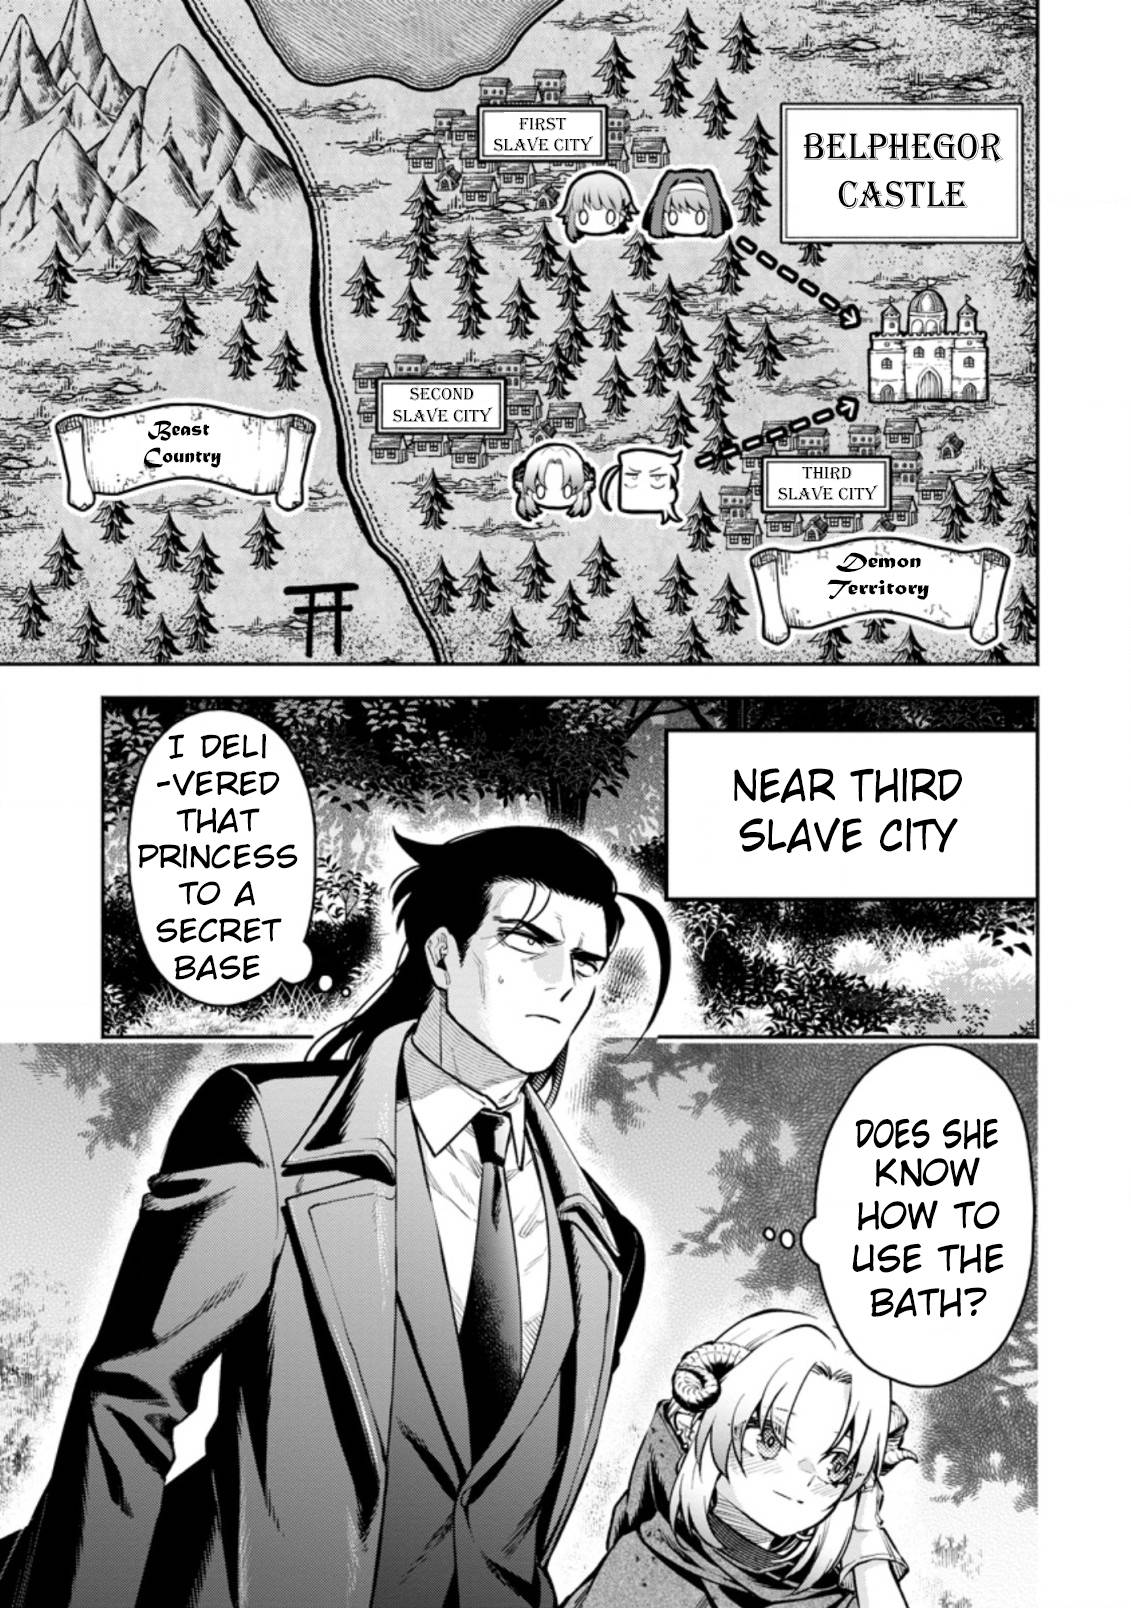 Maou-sama, Retry! R - Chapter 1 - Page 2 - Raw Manga 生漫画